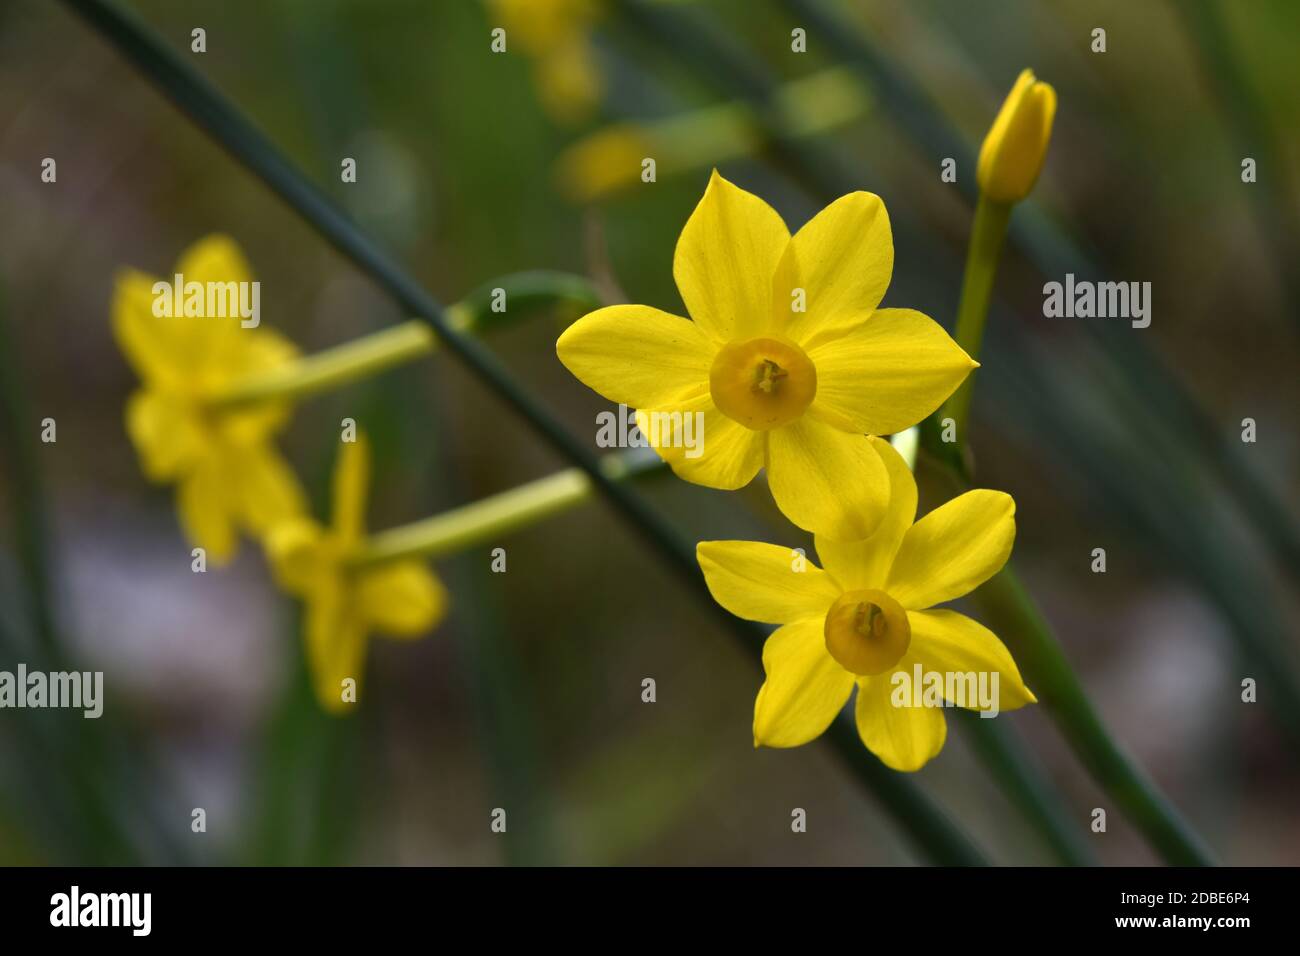 Jonquilla daffodil Stock Photo